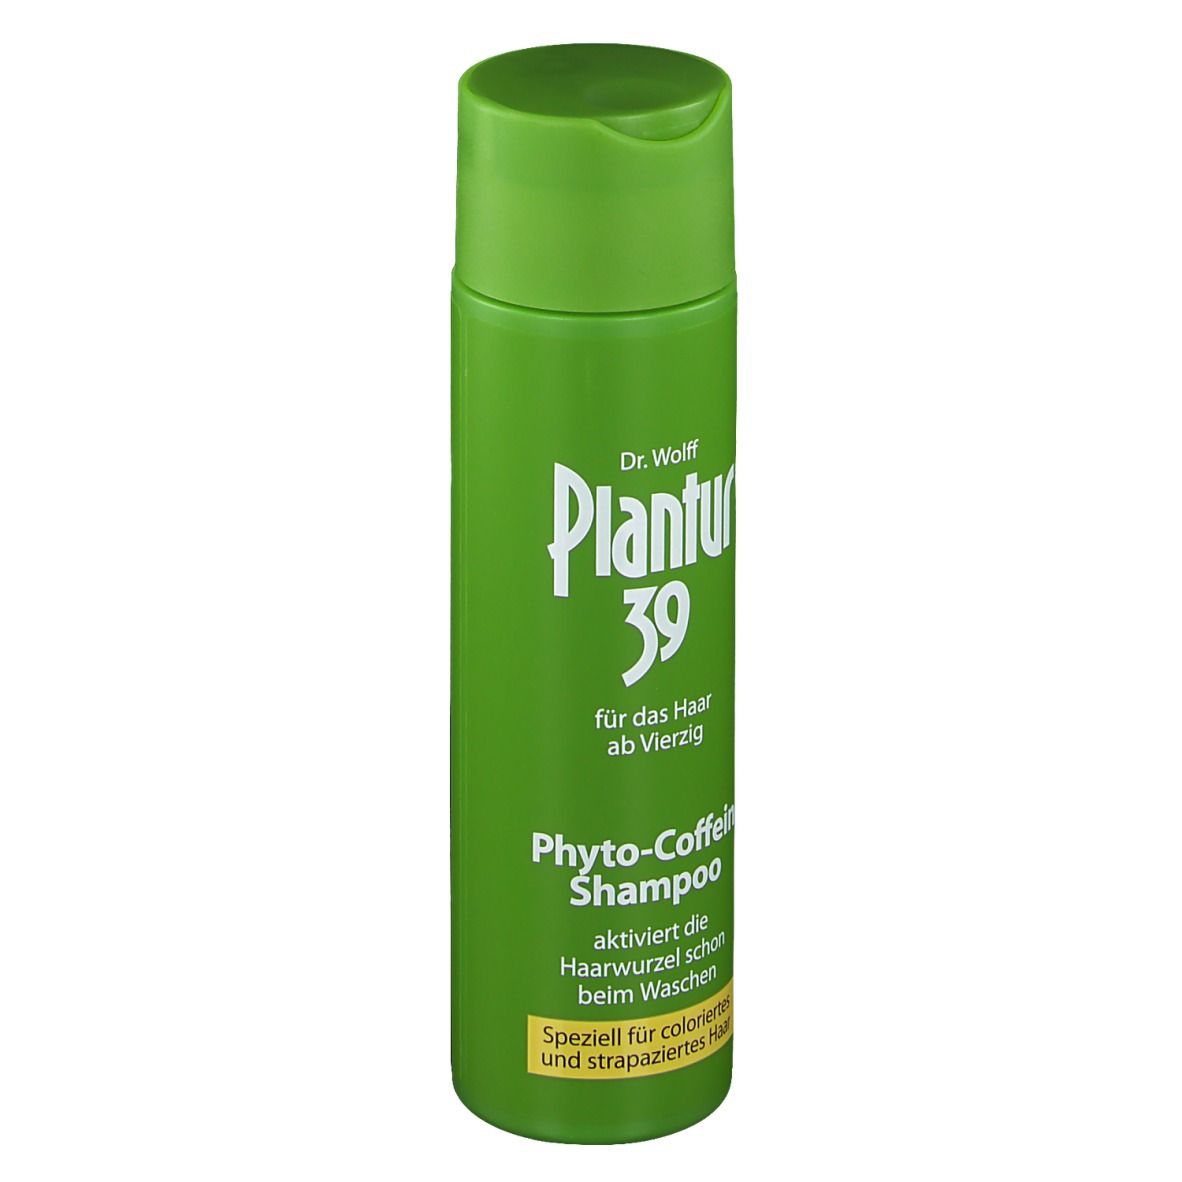 Plantur 39 Phyto-Caféine Shampooing